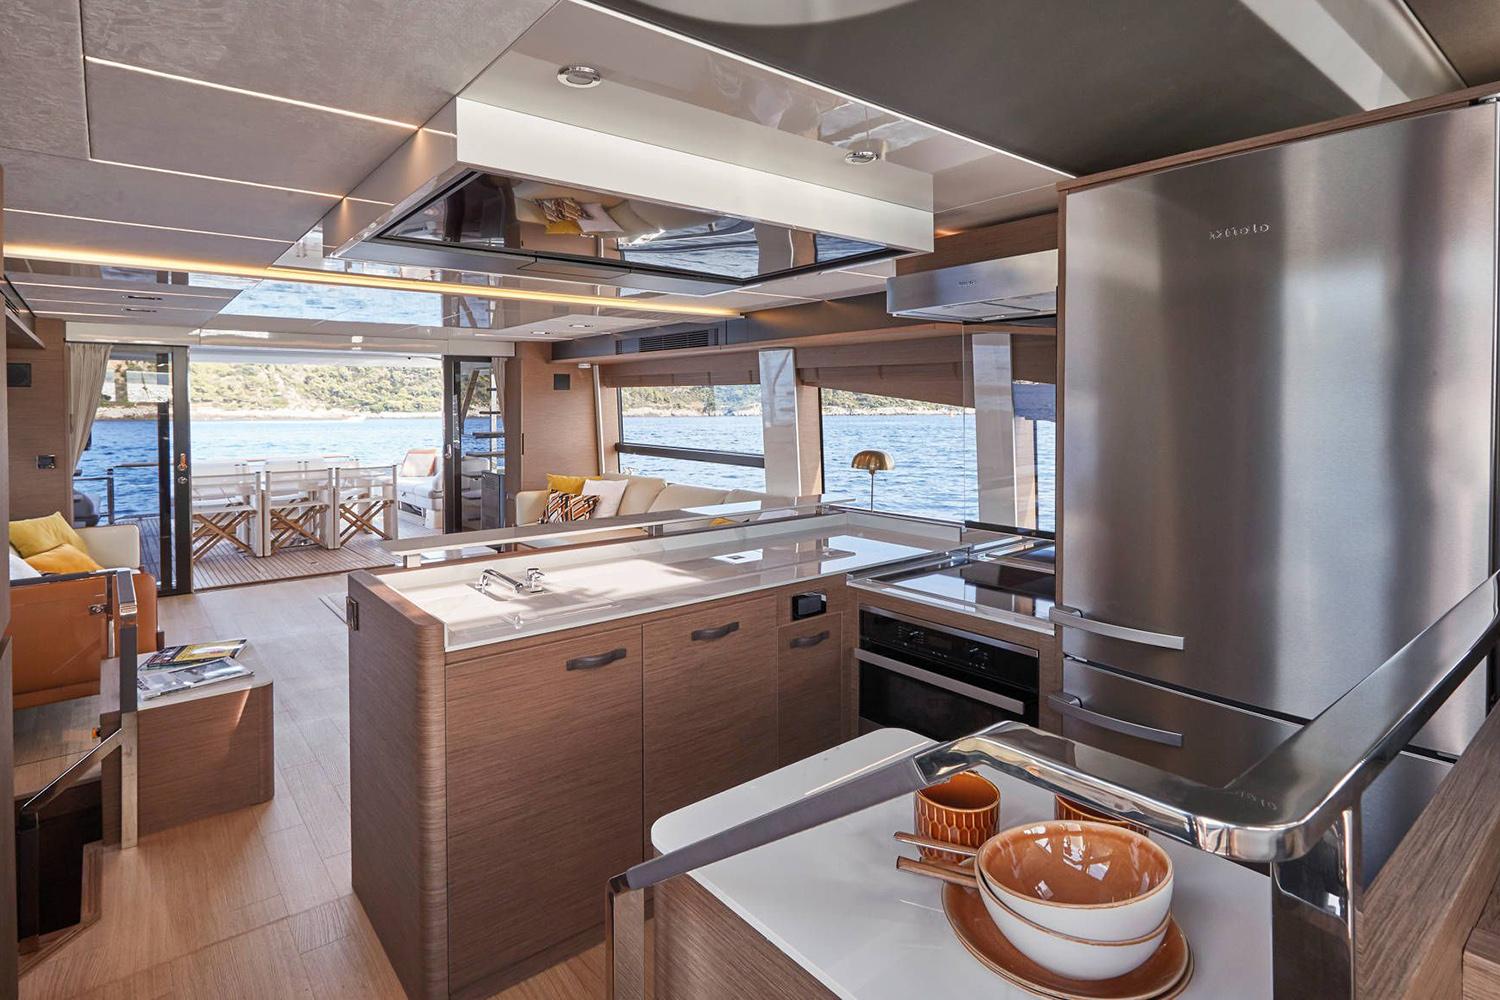 Il Disfrute Yacht Photos Pics Prestige X70 Kitchen